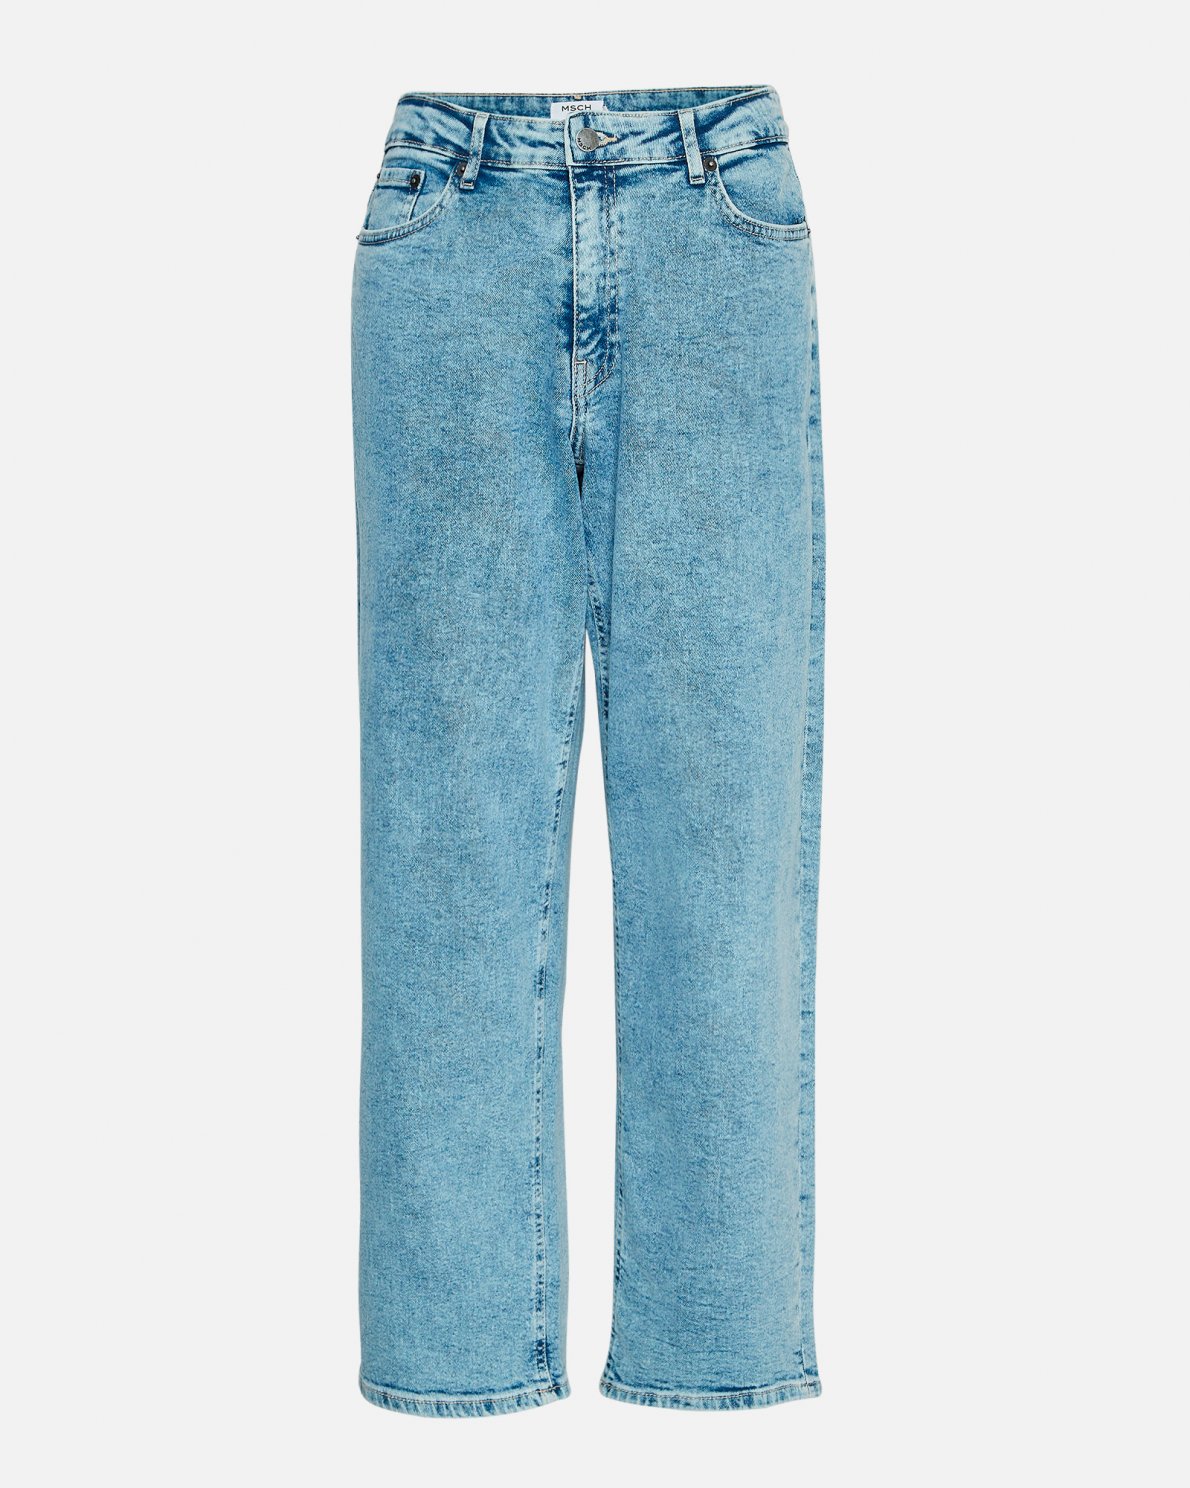 MSCH Copenhagen - MSCHEike Rikka Ankle Jeans - Blue Denim 2